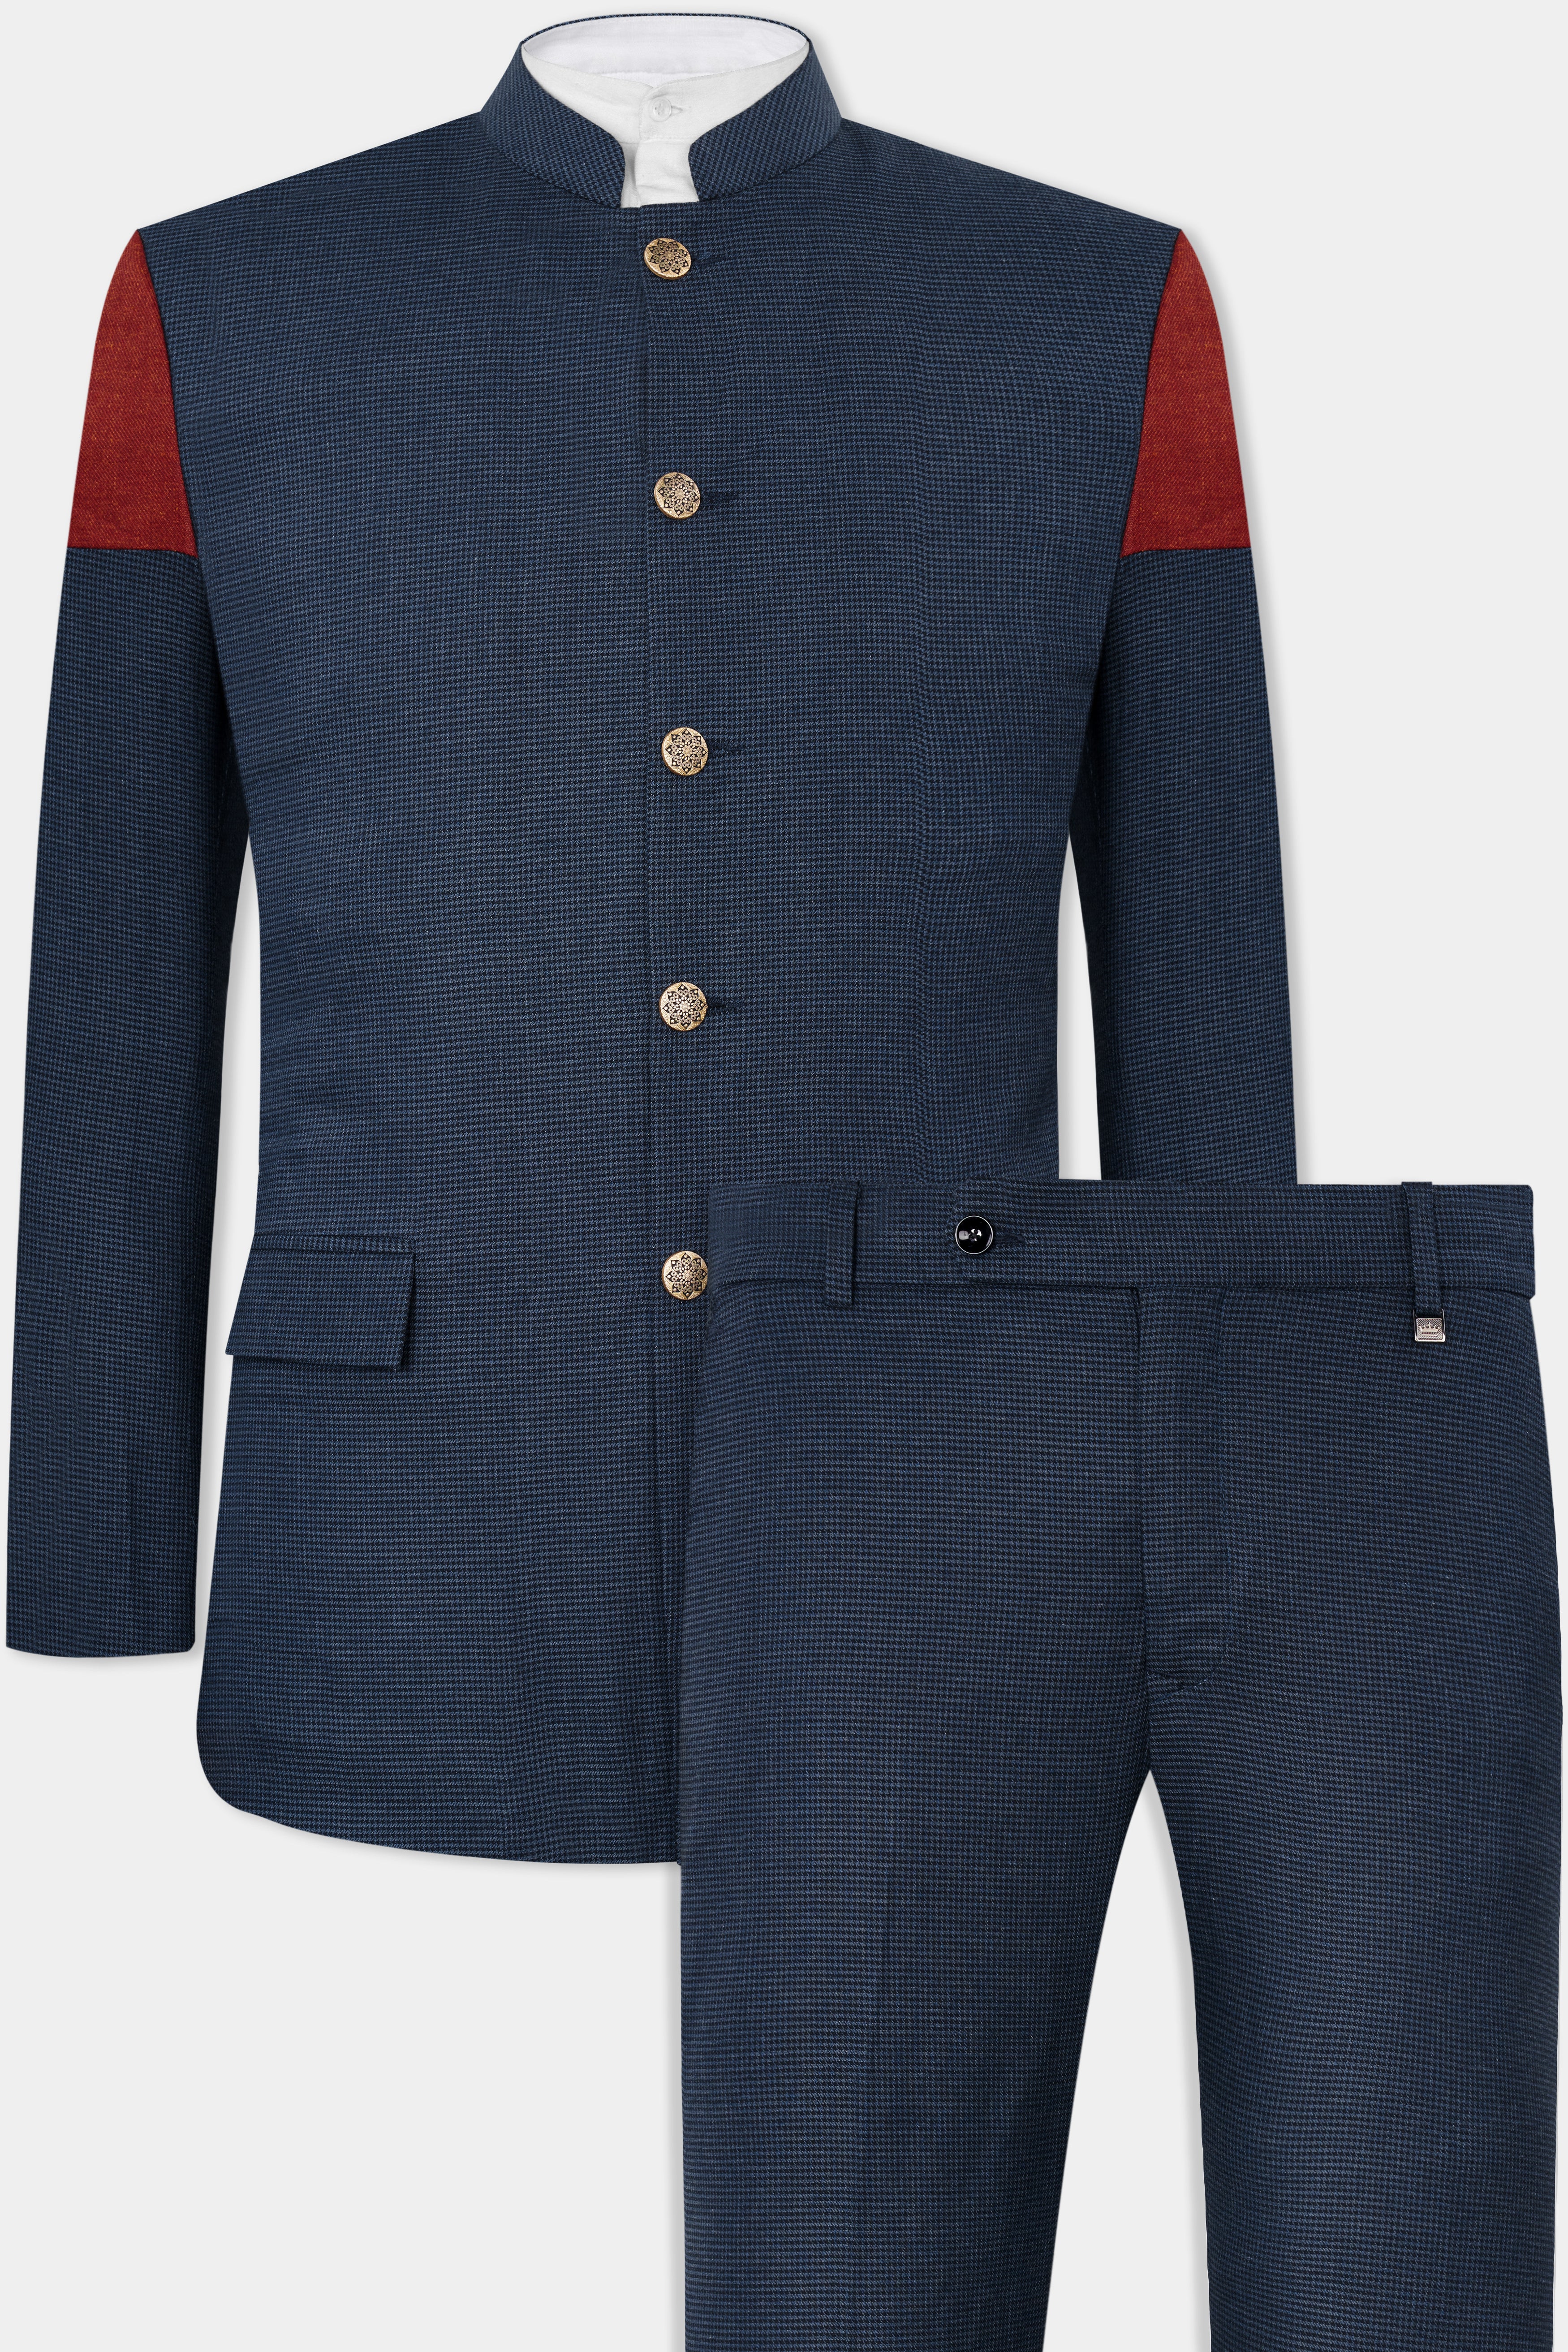 Limed Spruce Blue Wool Rich Bandhgala Designer Suit With Houndstooth Pattern ST2824-BG-D21-36, ST2824-BG-D21-38, ST2824-BG-D21-40, ST2824-BG-D21-42, ST2824-BG-D21-44, ST2824-BG-D21-46, ST2824-BG-D21-48, ST2824-BG-D21-50, ST2824-BG-D21-52, ST2824-BG-D21-54, ST2824-BG-D21-56, ST2824-BG-D21-58, ST2824-BG-D21-60